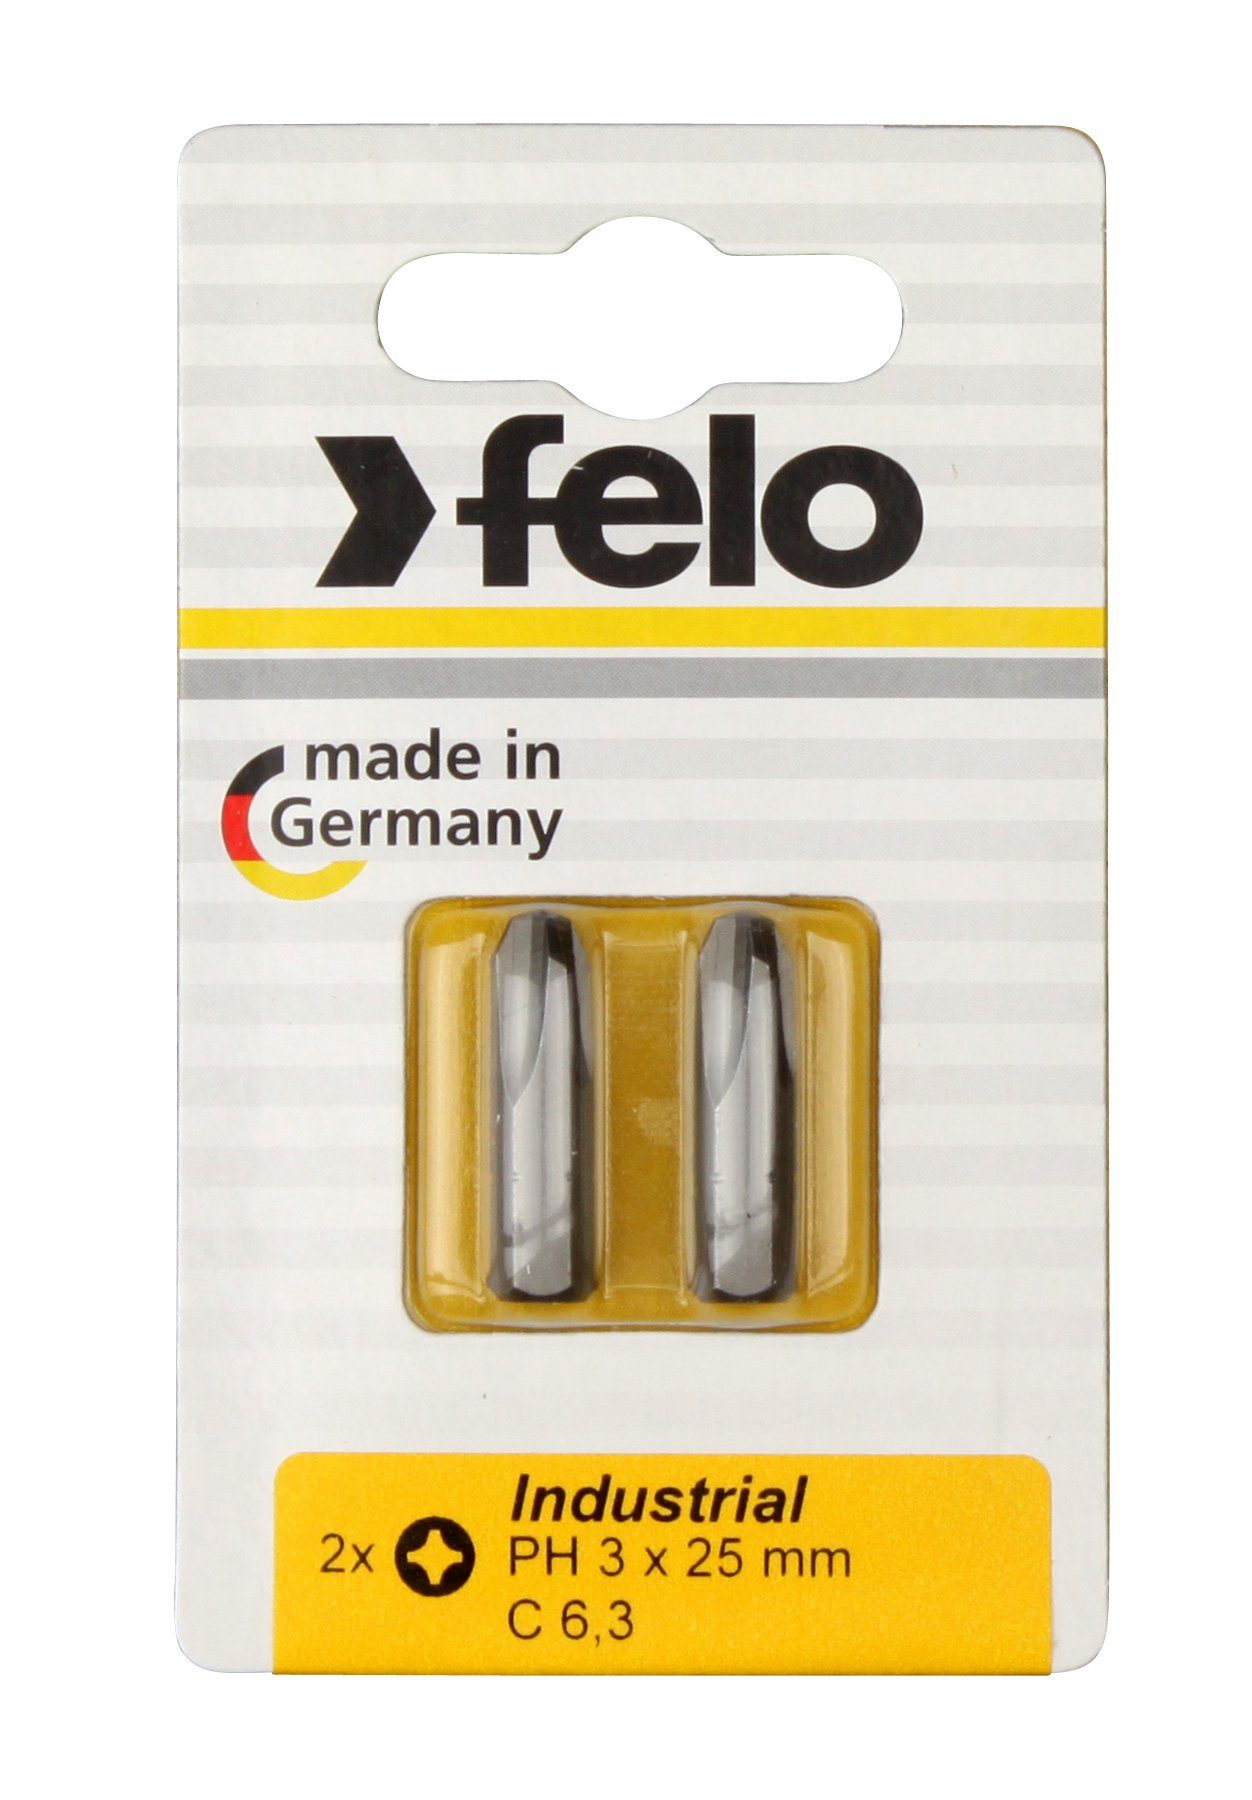 Felo Kreuzschlitz-Bit Felo Bit, Industrie Stk 3 6,3 25mm, x Karte x auf 5 5 PH C